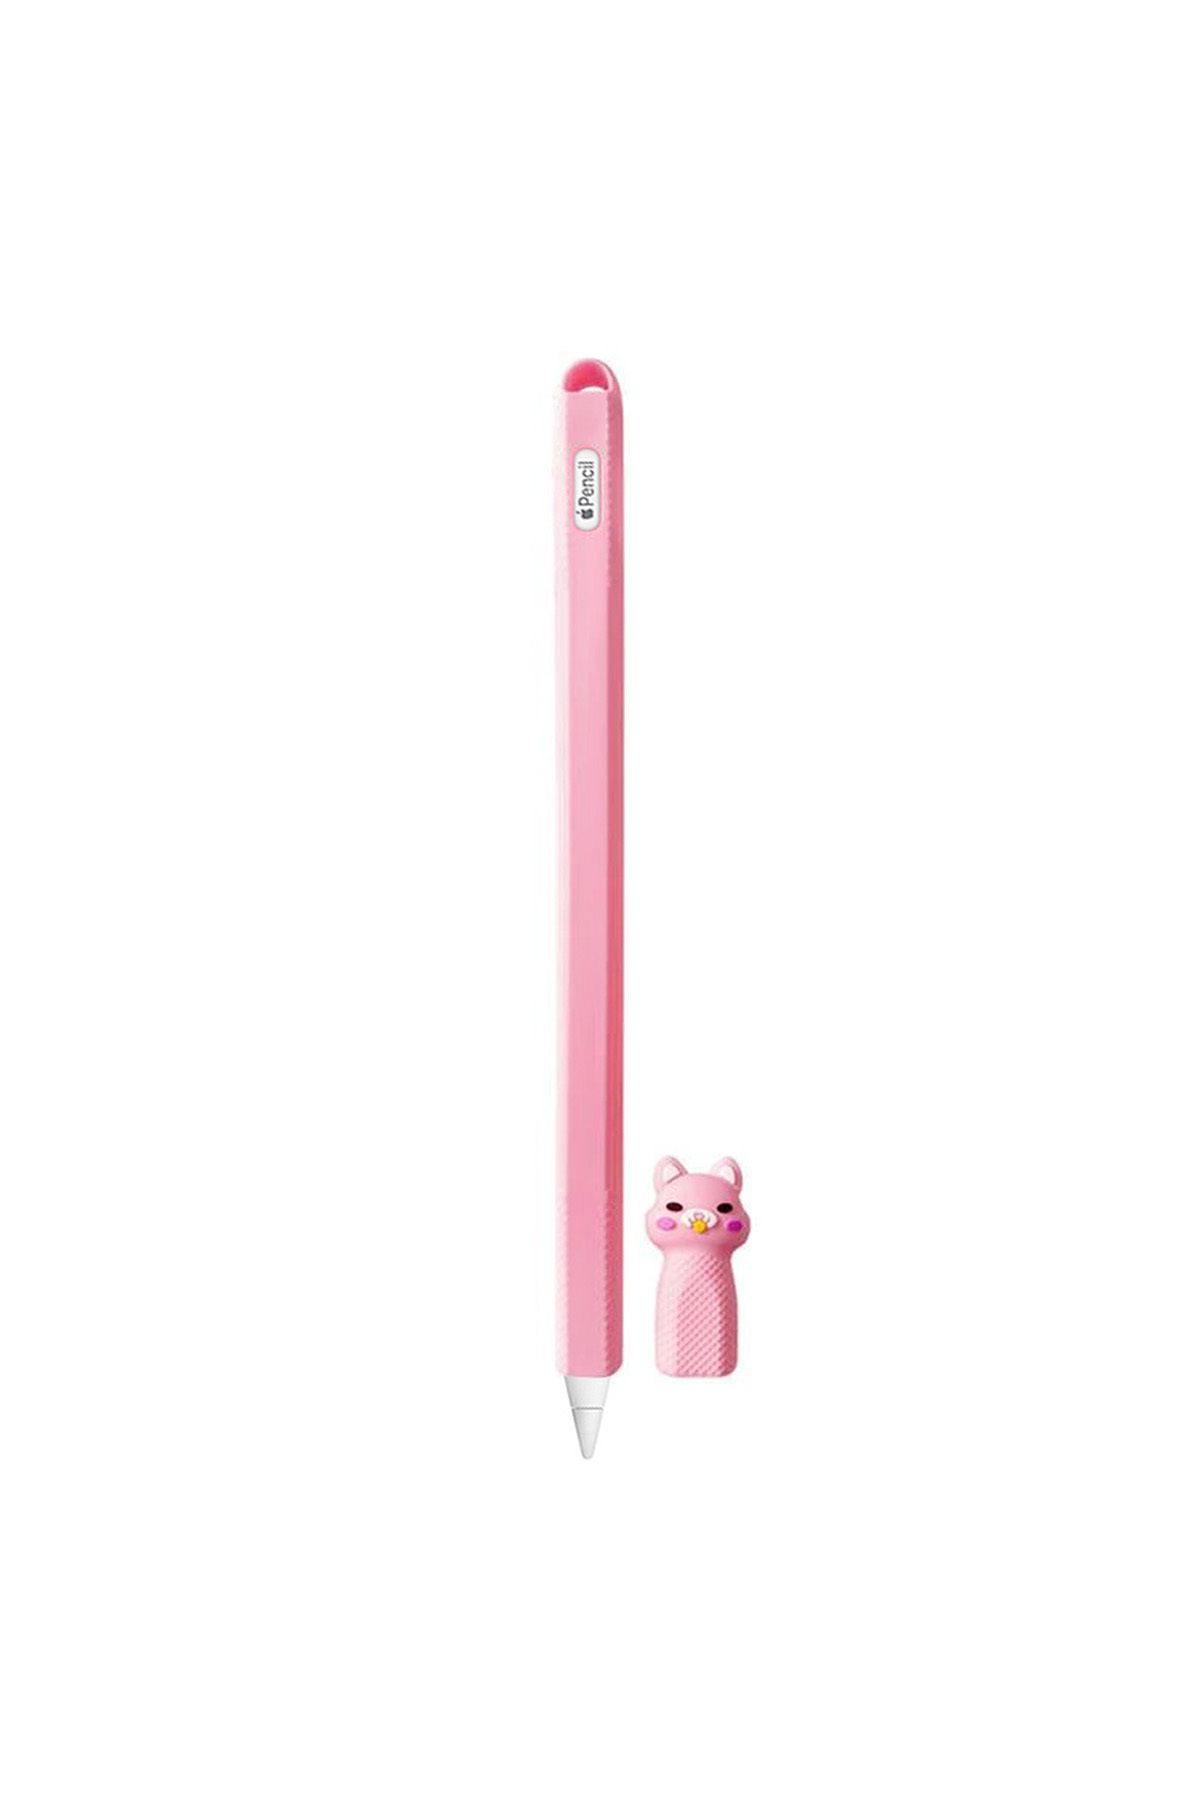 Tagomoon Apple Pencil (2. NESİL) Uyumlu Kılıf Renkli Kedi Figürlü Kaydırmaz Silikon Koruyucu